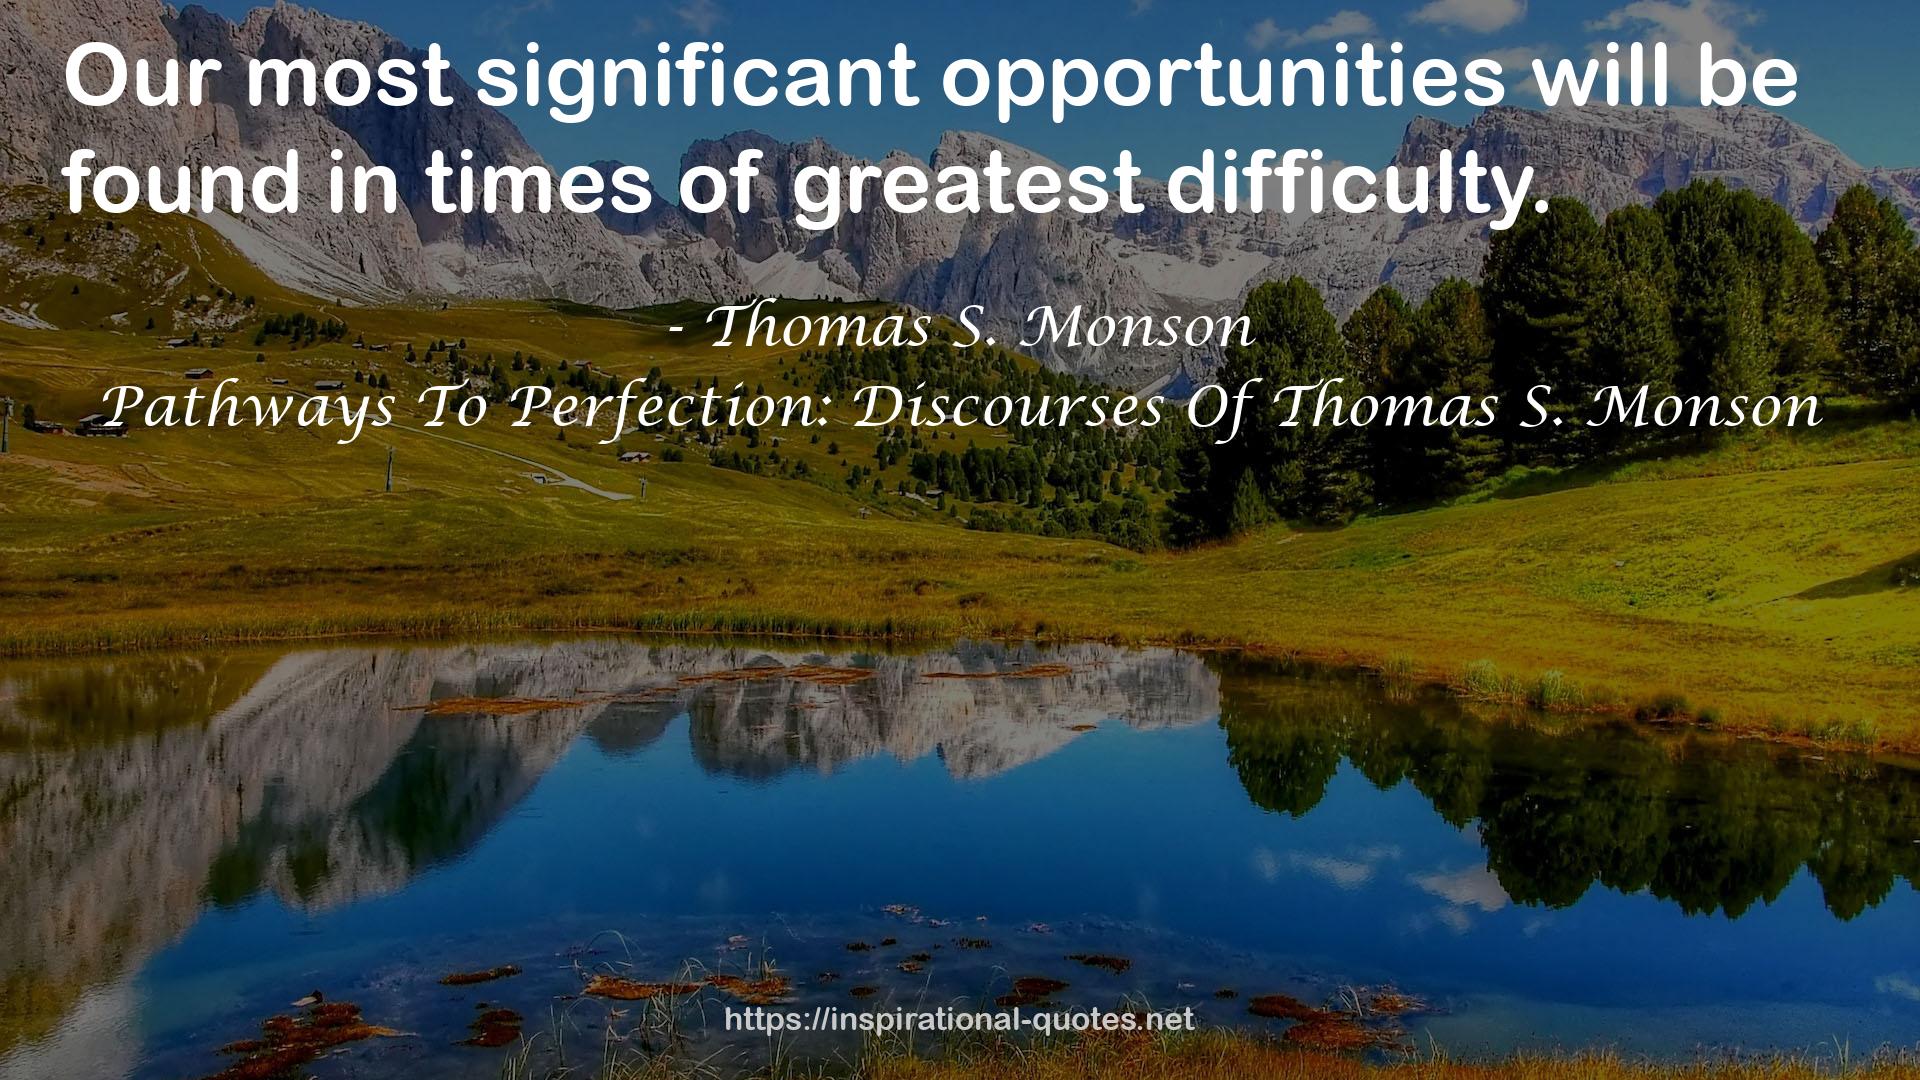 Pathways To Perfection: Discourses Of Thomas S. Monson QUOTES